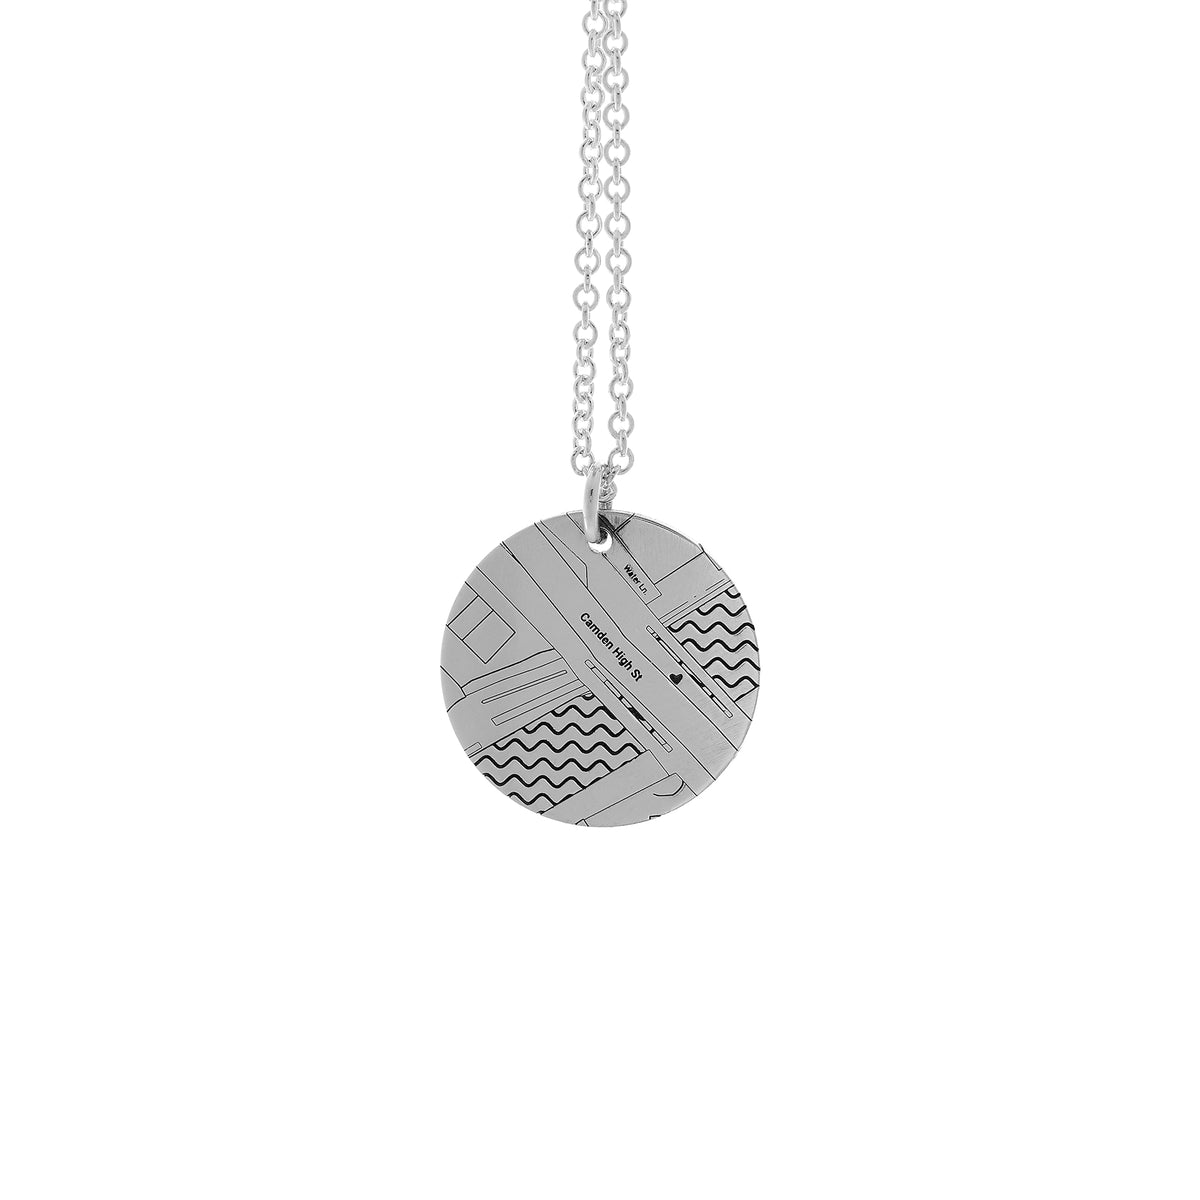 Address custom street map necklace pendant sterling silver bespoke engraved